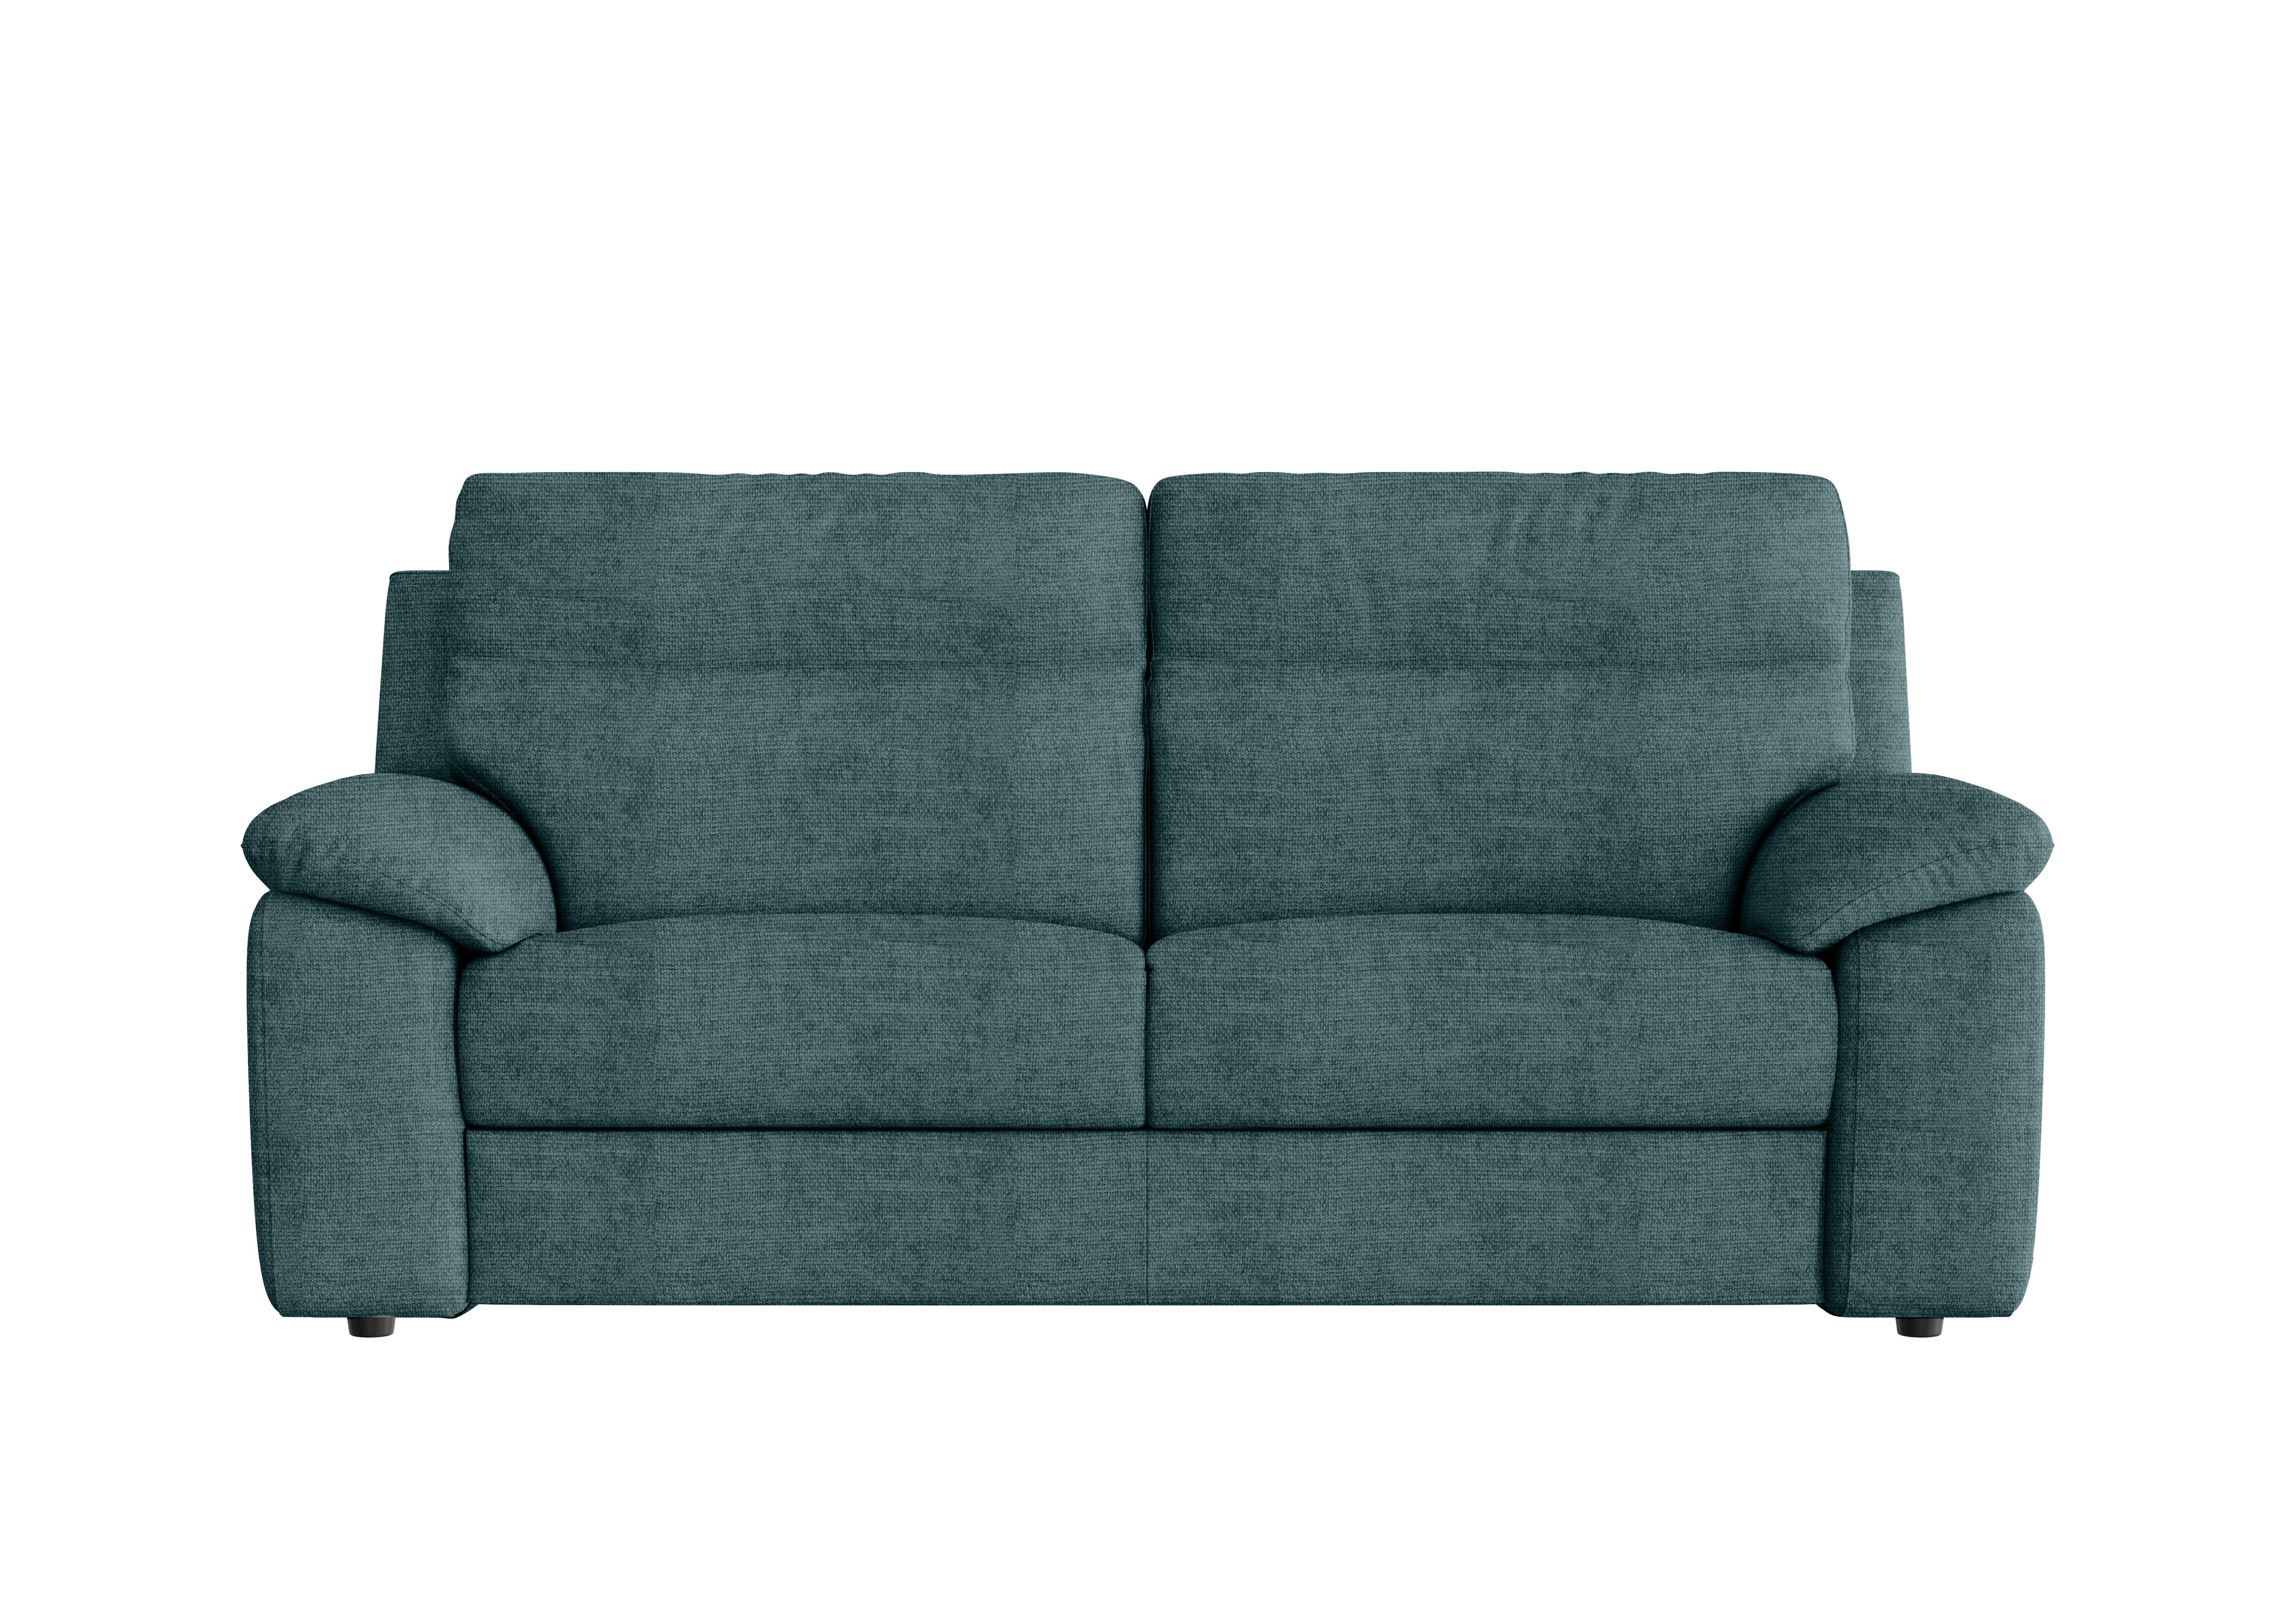 Pepino 3 Seater Fabric Sofa in Baobab Blue 557 on Furniture Village